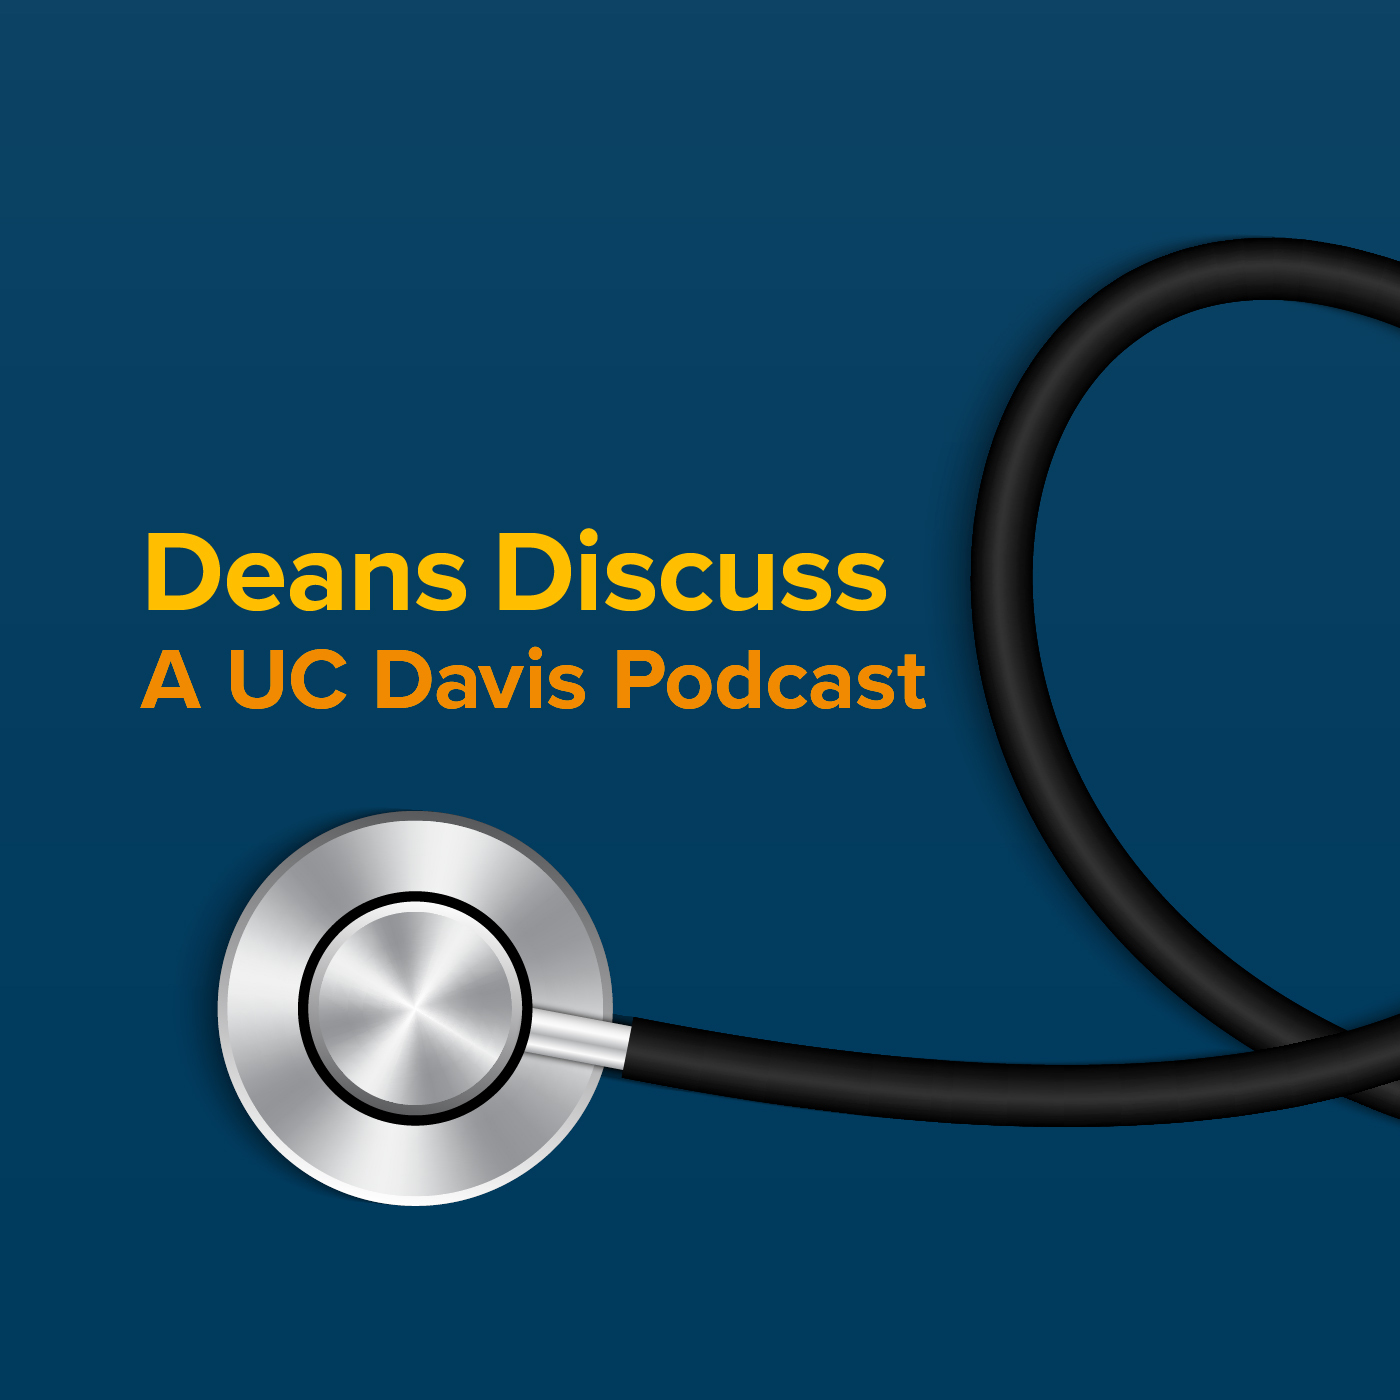 Deans Discuss: A UC Davis Podcast